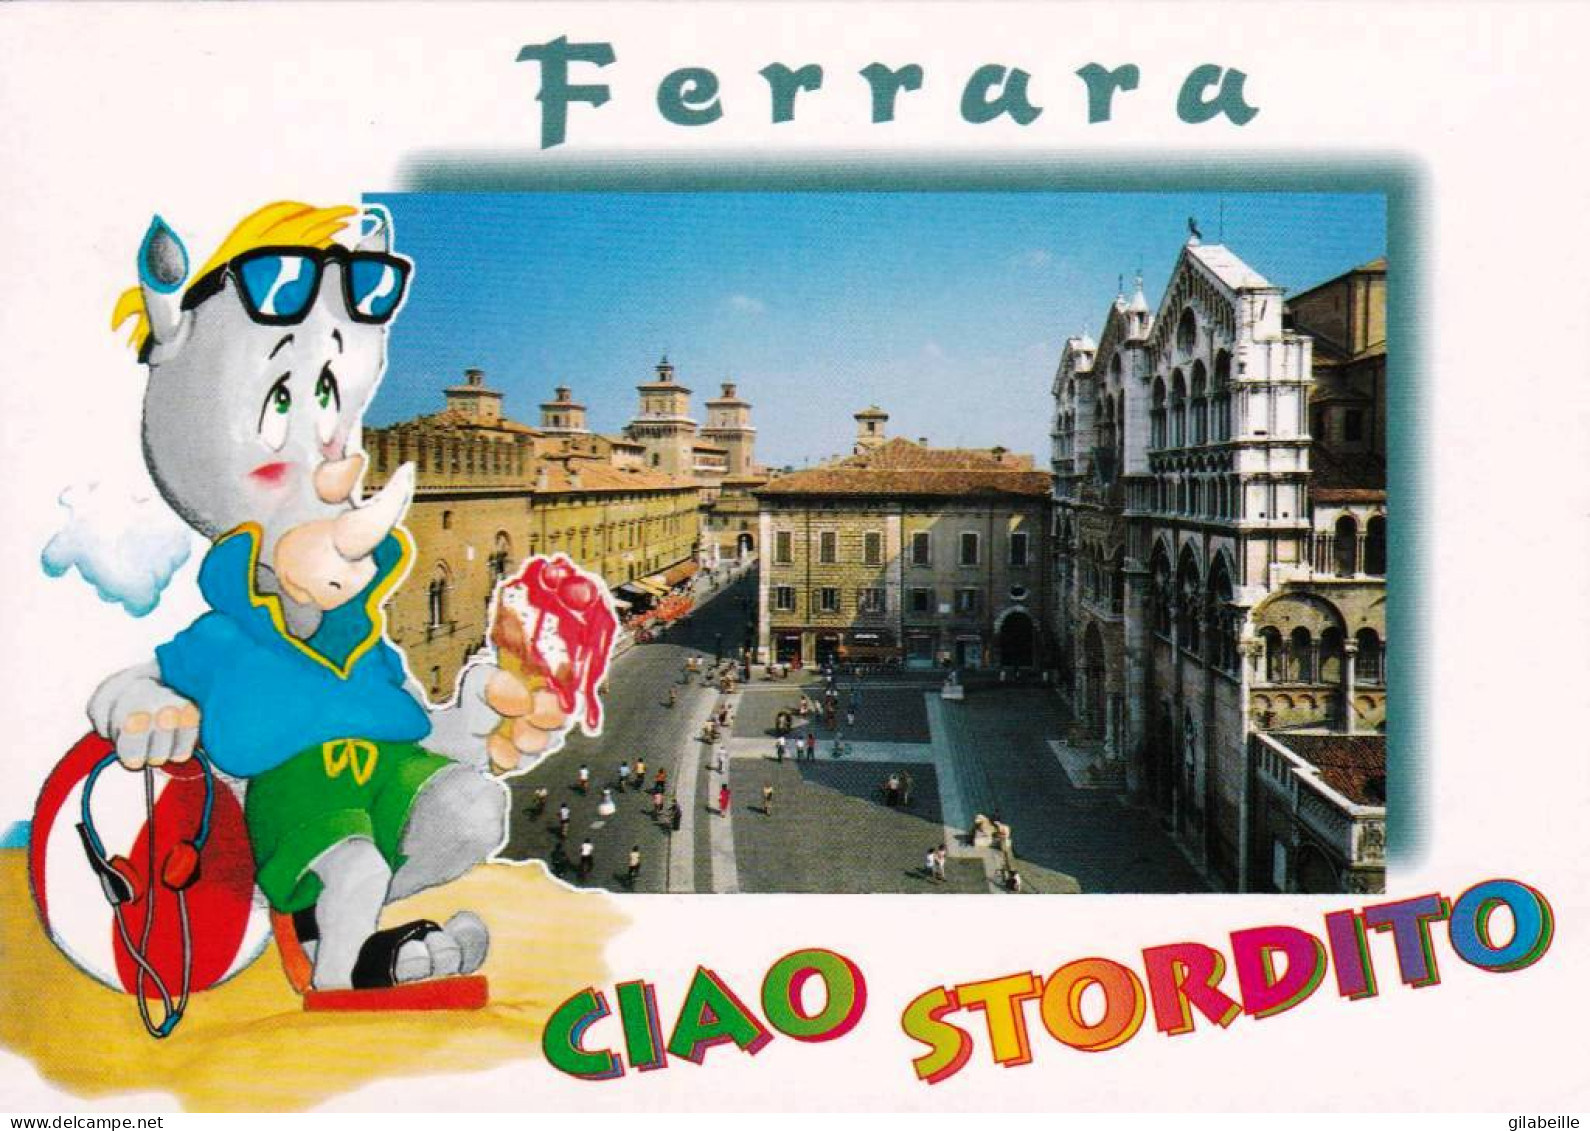 FERRARA - Ciao Stordito - Firenze (Florence)